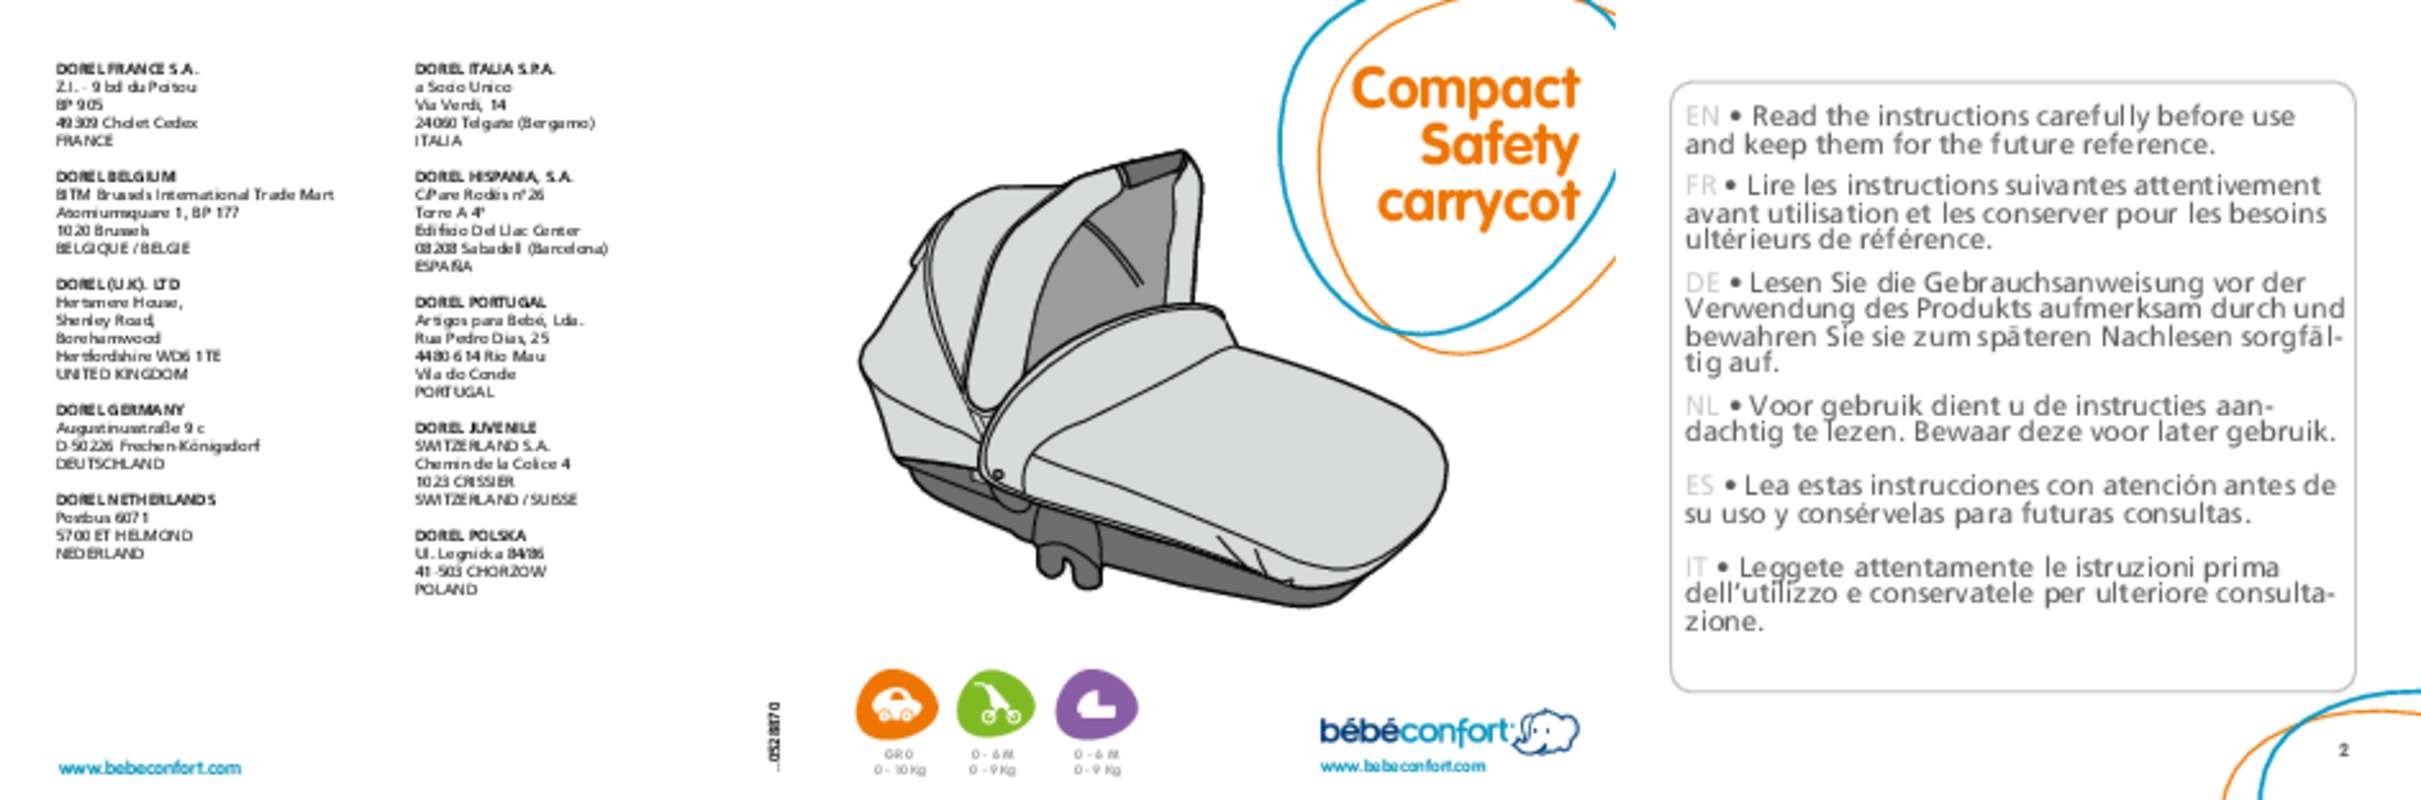 Guide utilisation BEBECONFORT COMPACT SAFETY CARRYCOT  de la marque BEBECONFORT